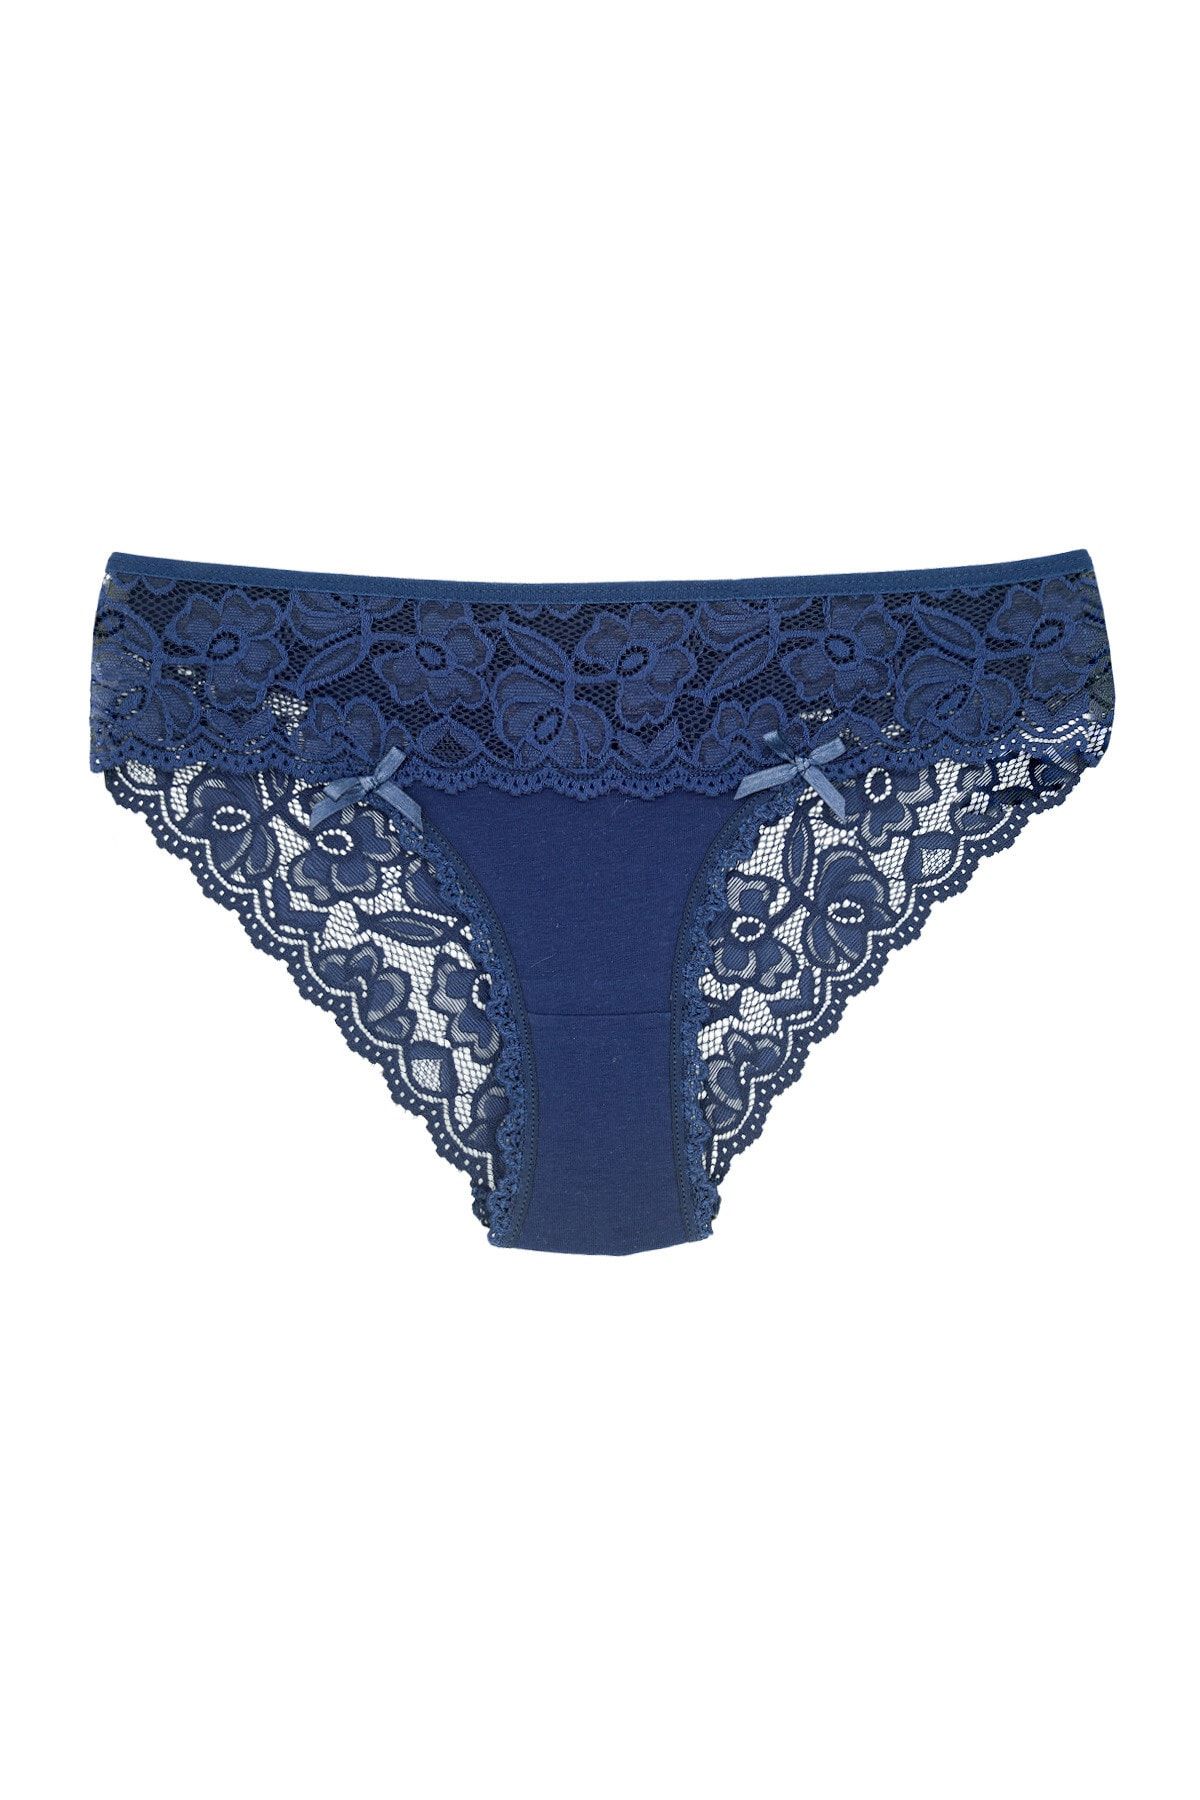 Navy blue lace panty, Women's panties